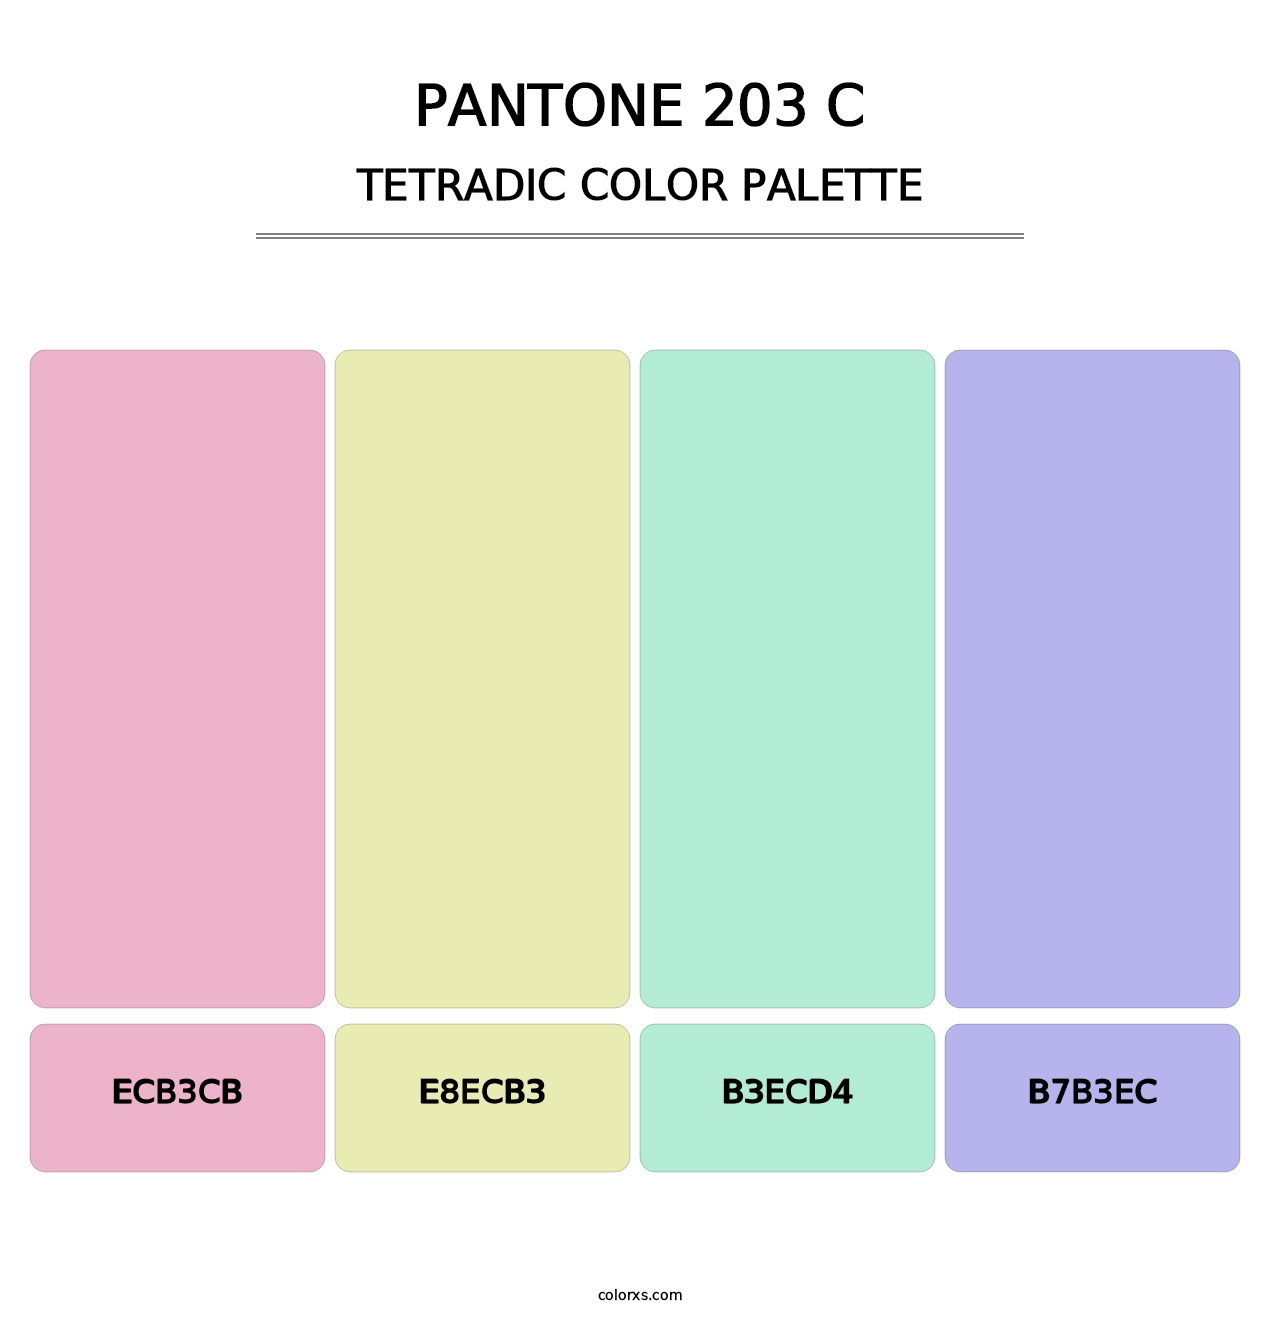 PANTONE 203 C - Tetradic Color Palette